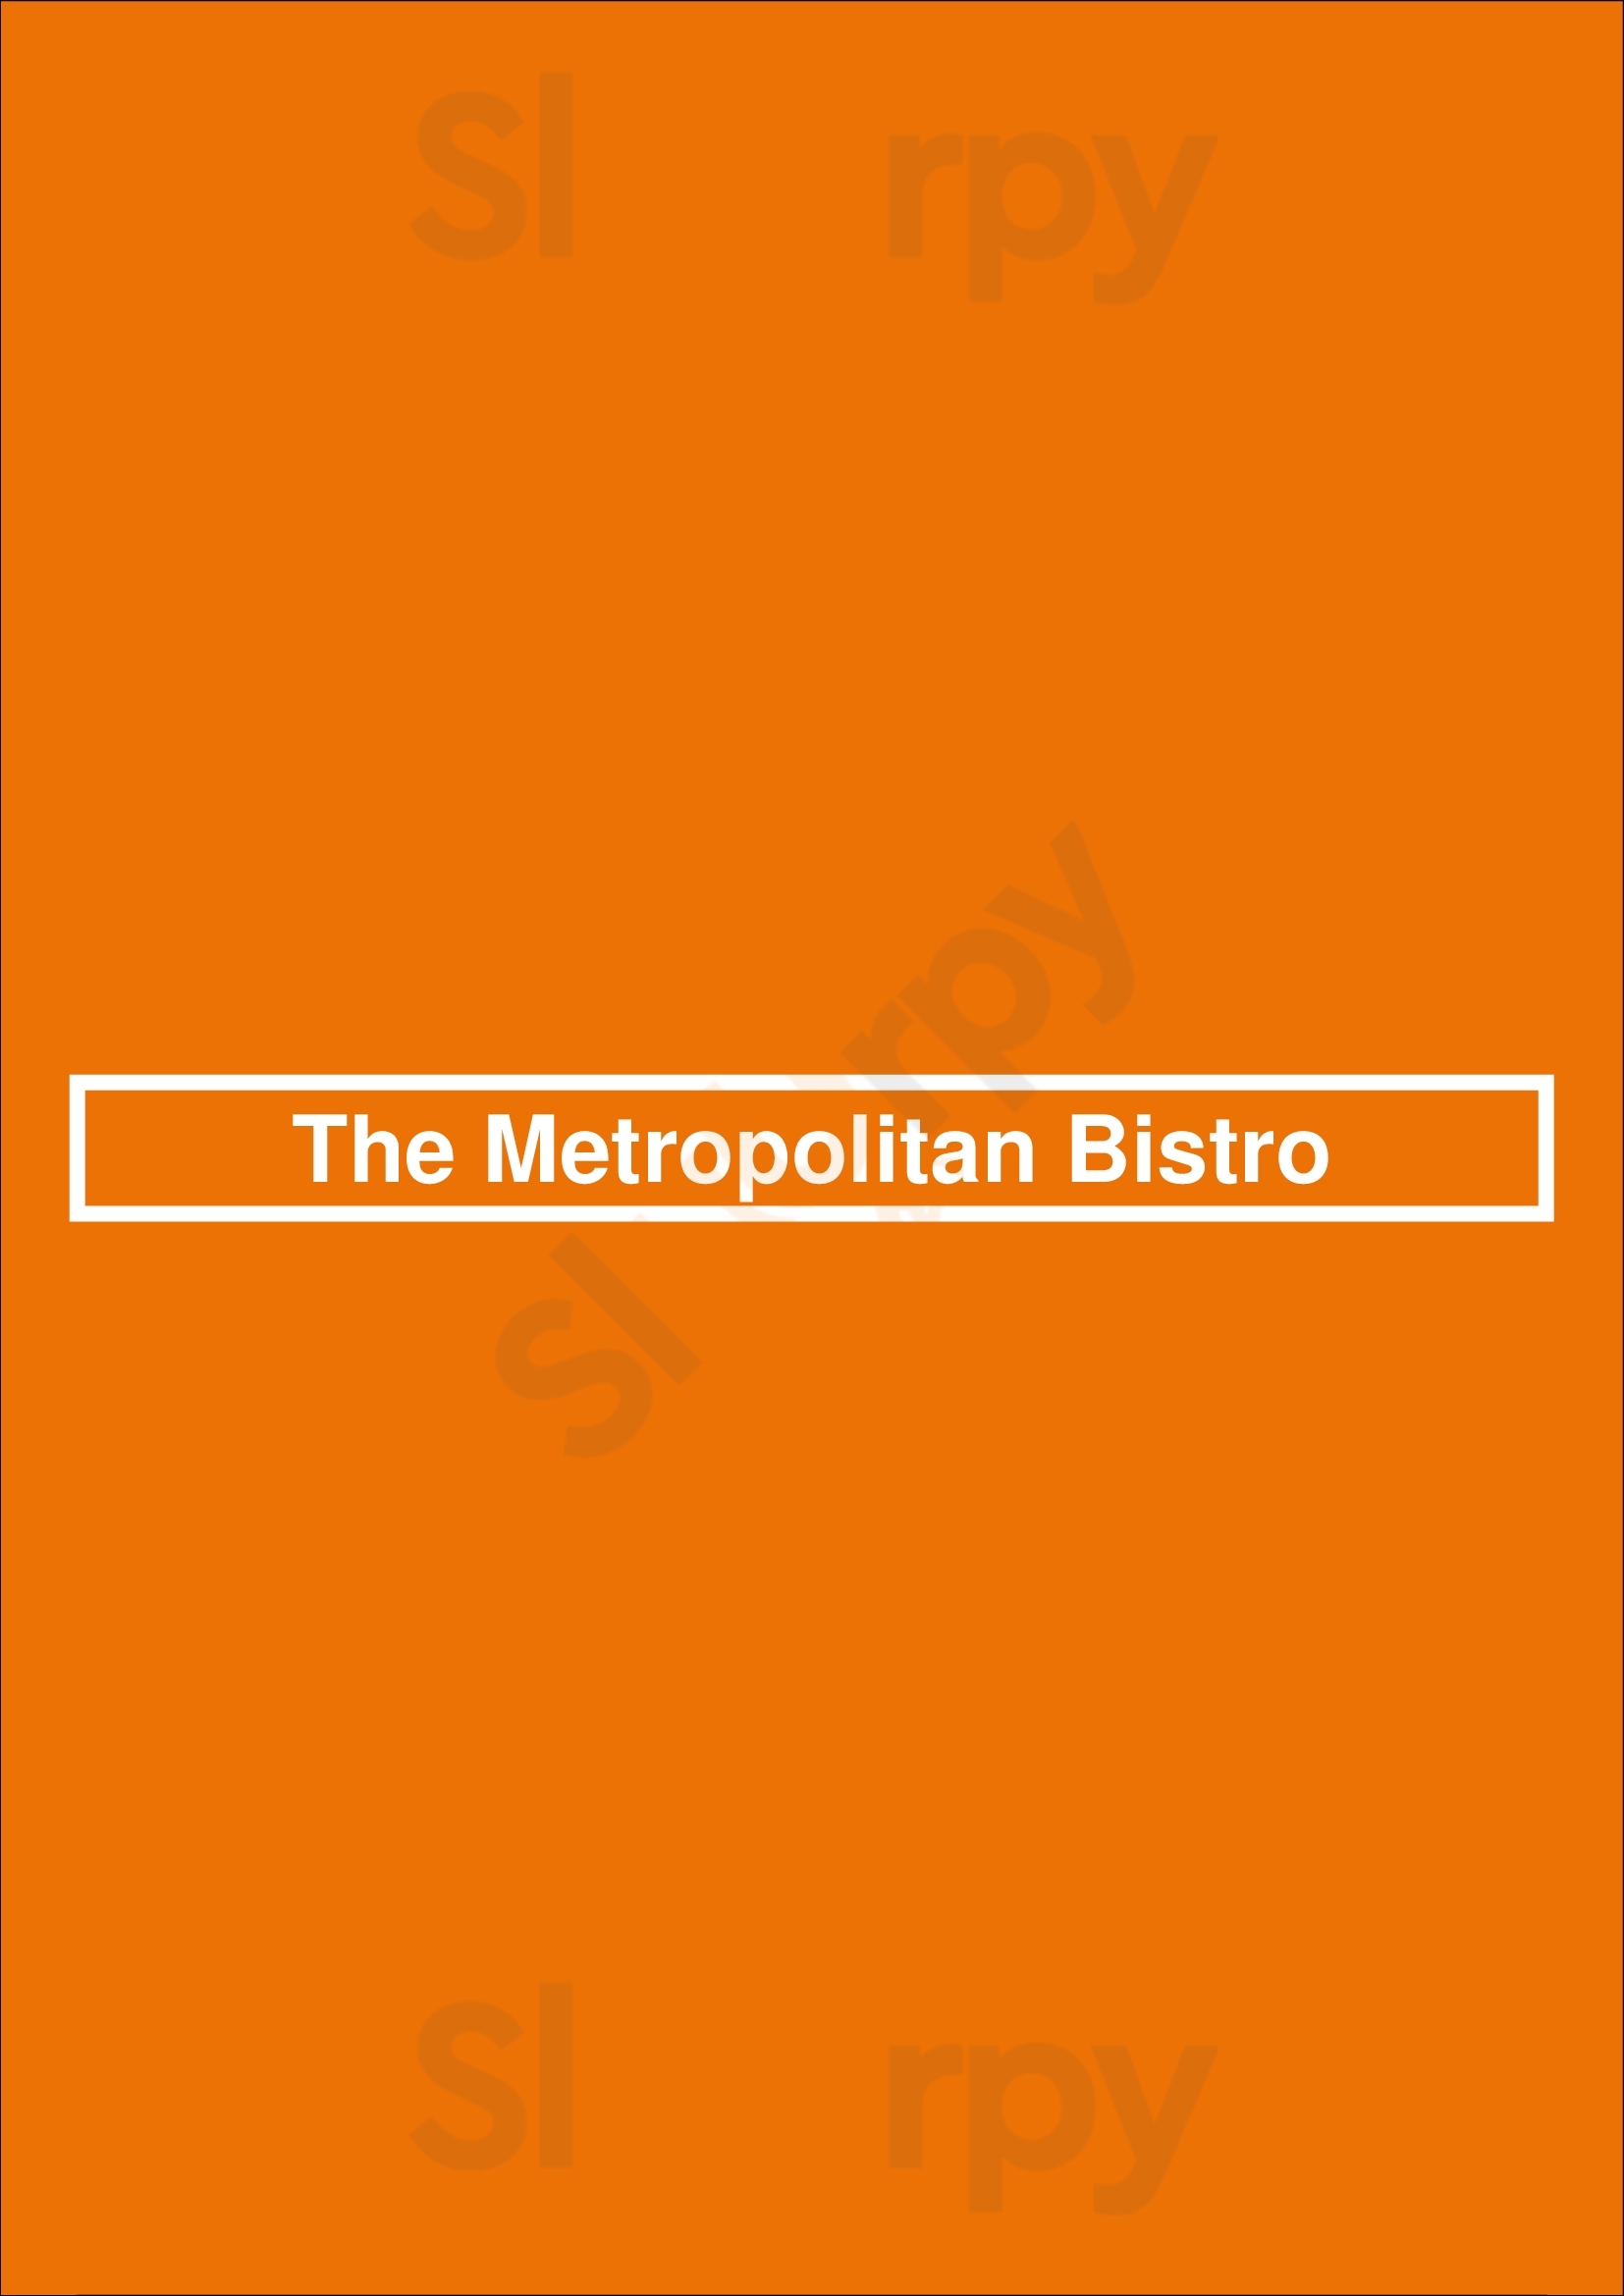 The Metropolitan Bistro Sea Cliff Menu - 1